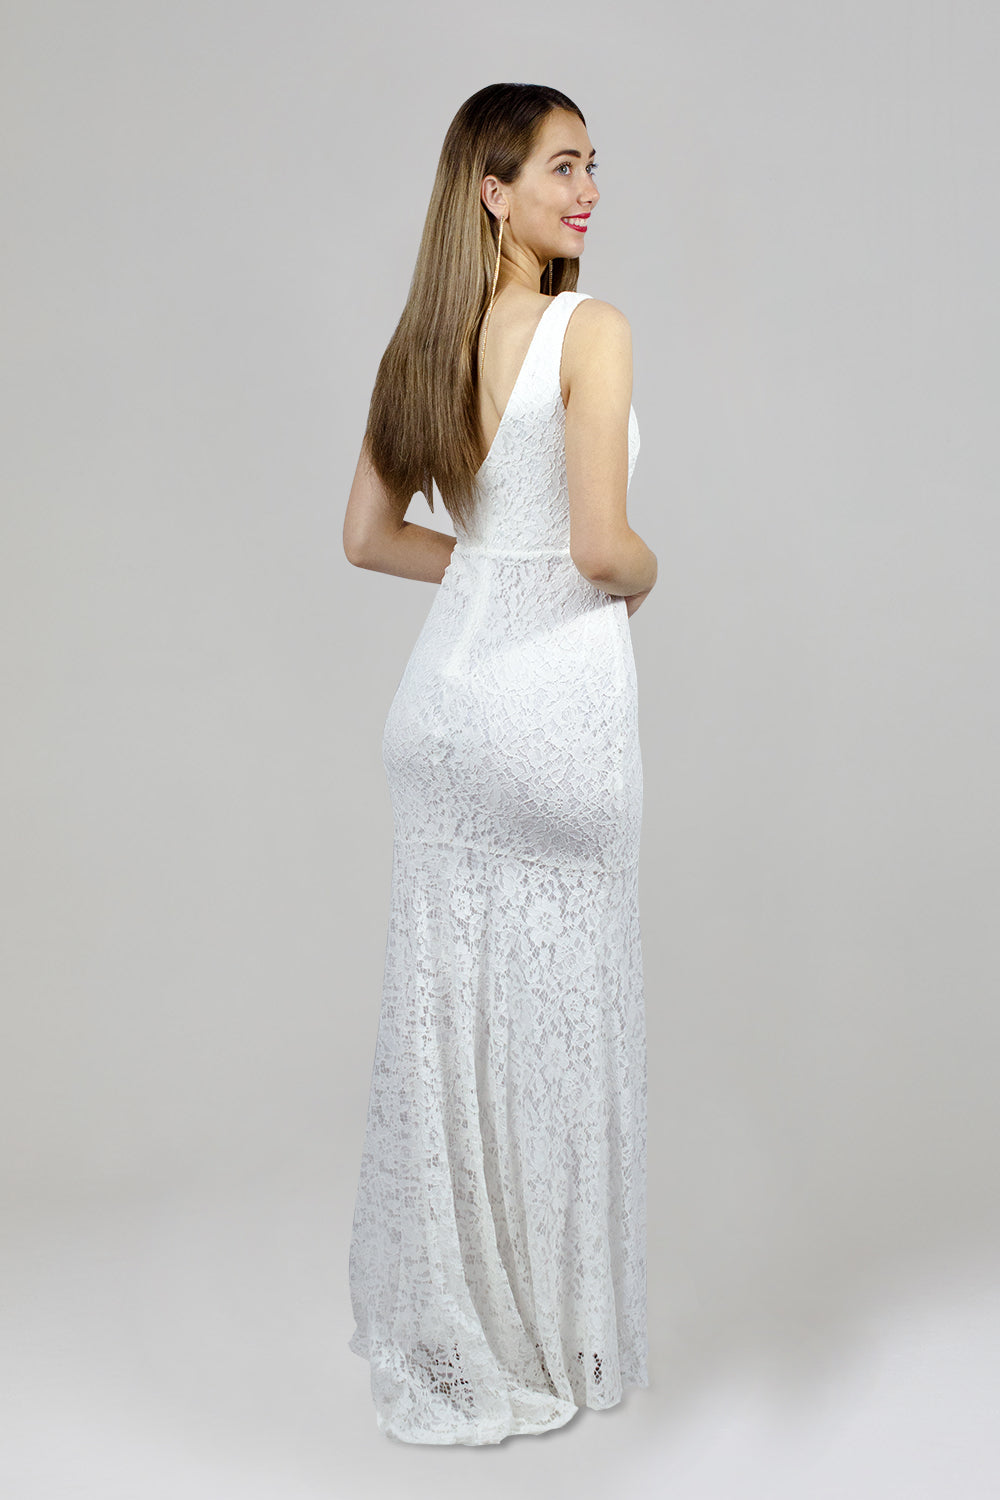 lace white mermaid bridesmaid dresses perth australia envious bridal & formal